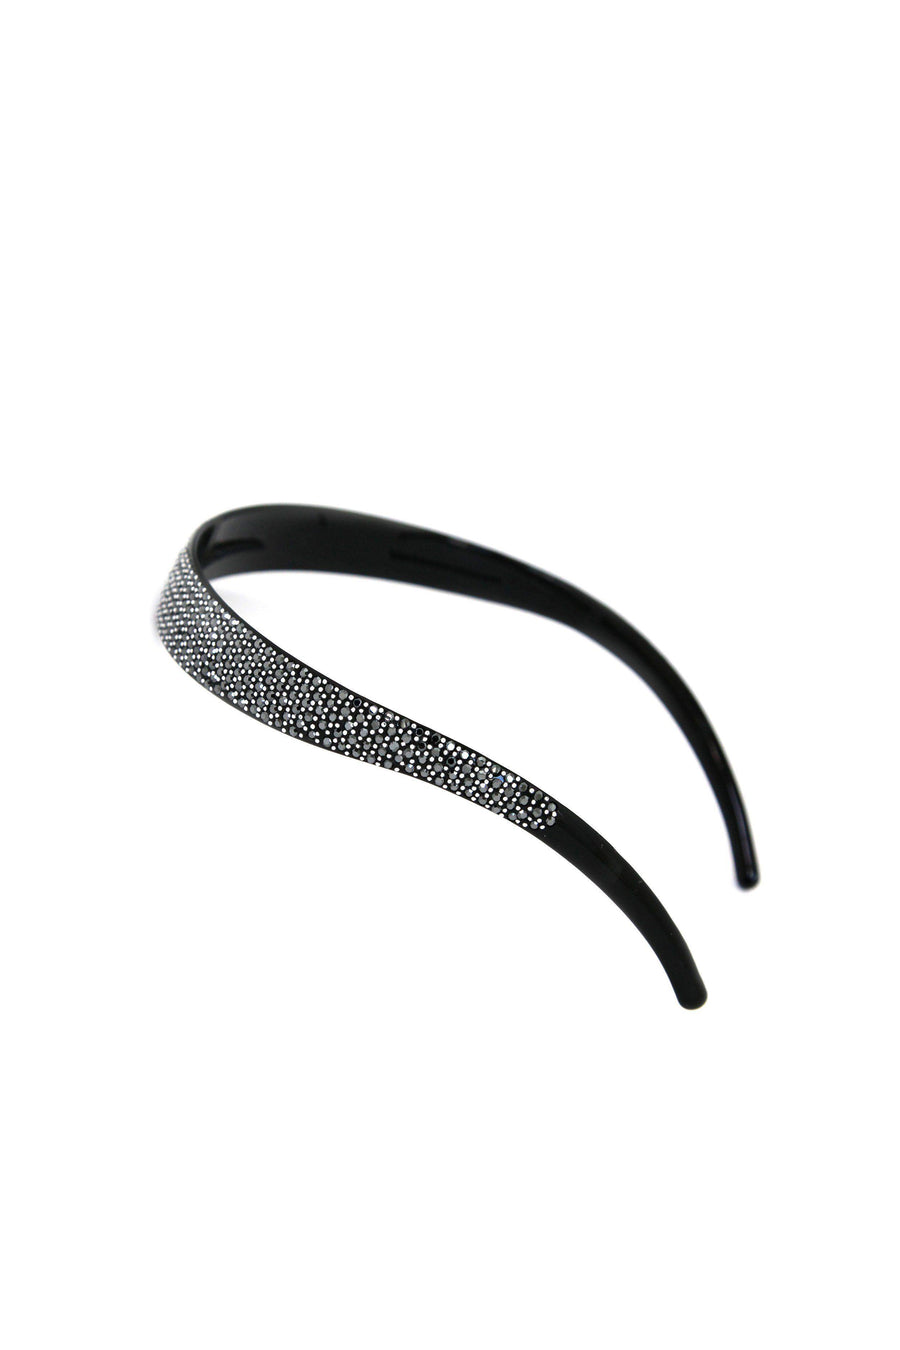 Soho Style Headband black Lightweight Crystal Covered Headband